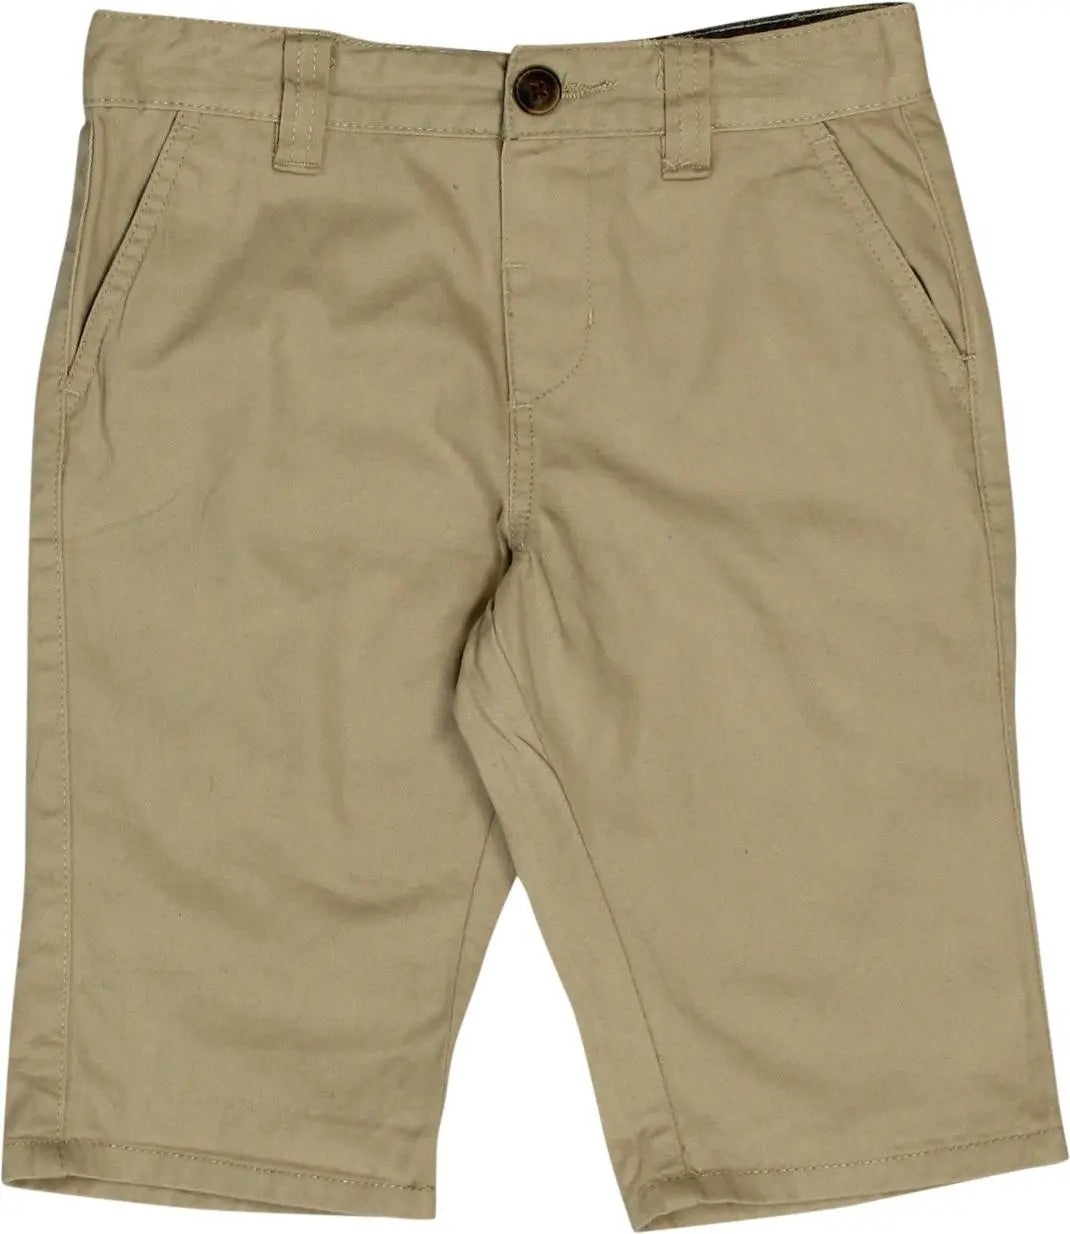 Denim Co - Beige Shorts- ThriftTale.com - Vintage and second handclothing